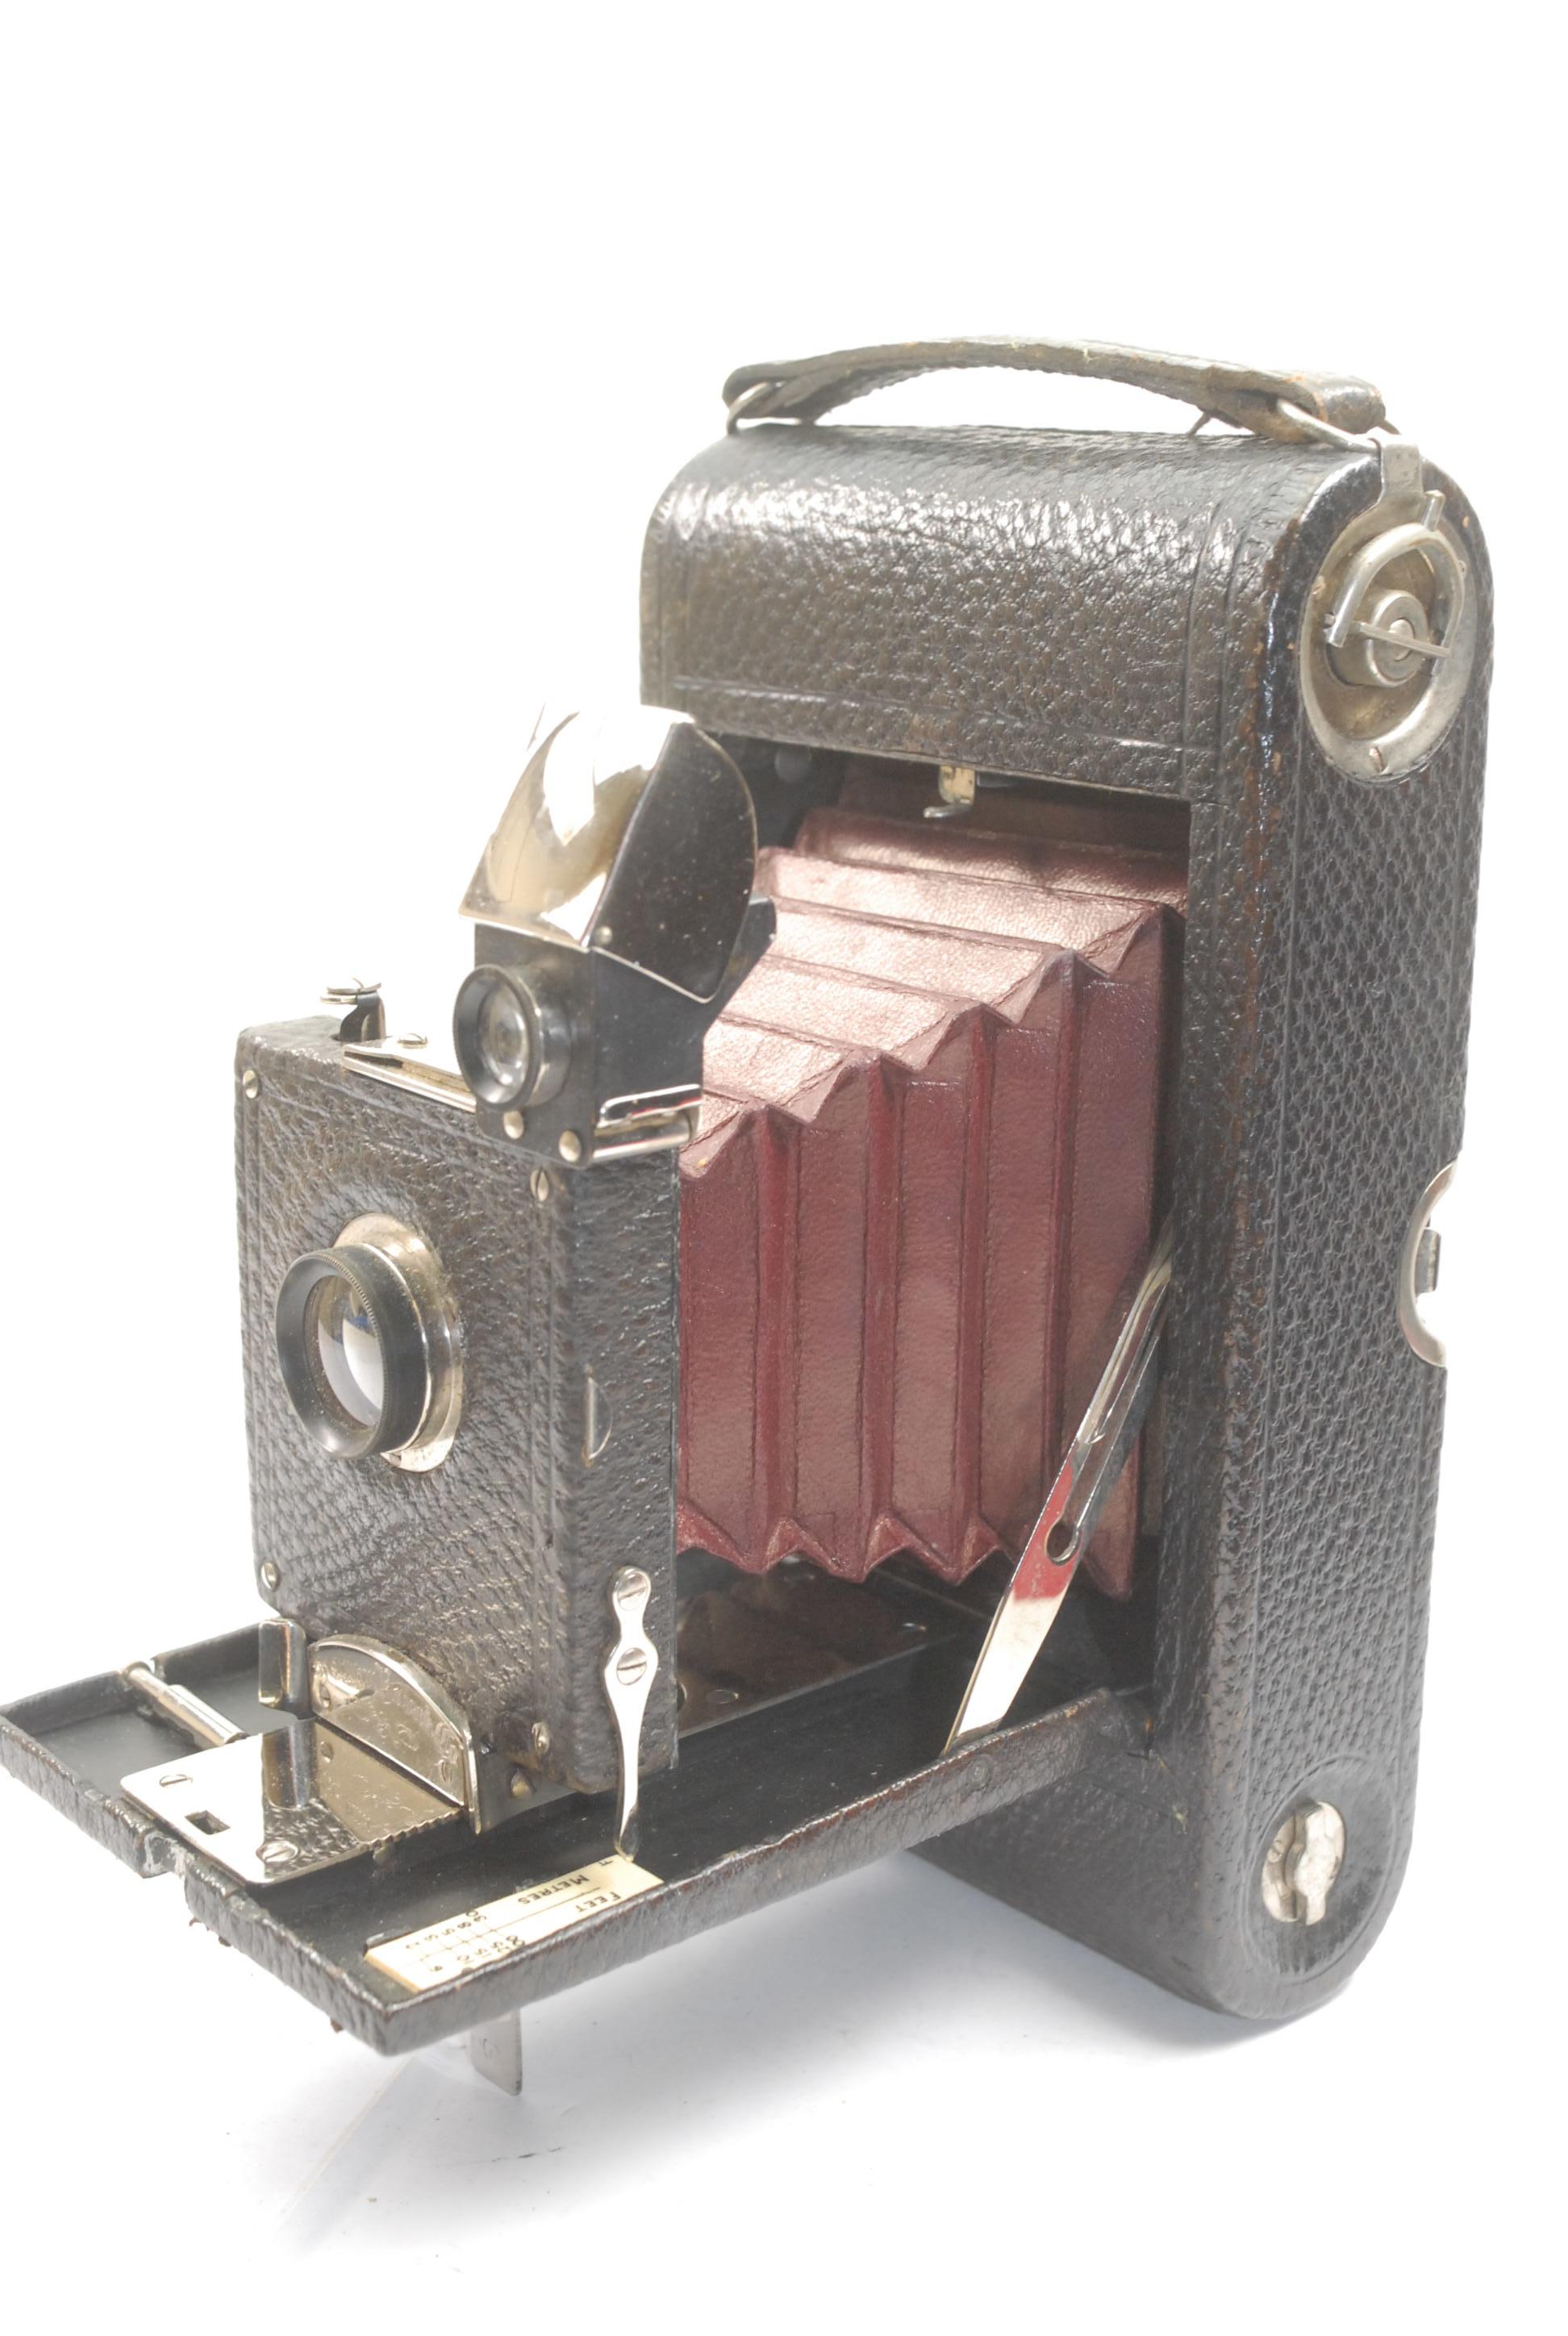 Kodak No.3 FPK Model A, c.1898, Leather lens board, really nice example